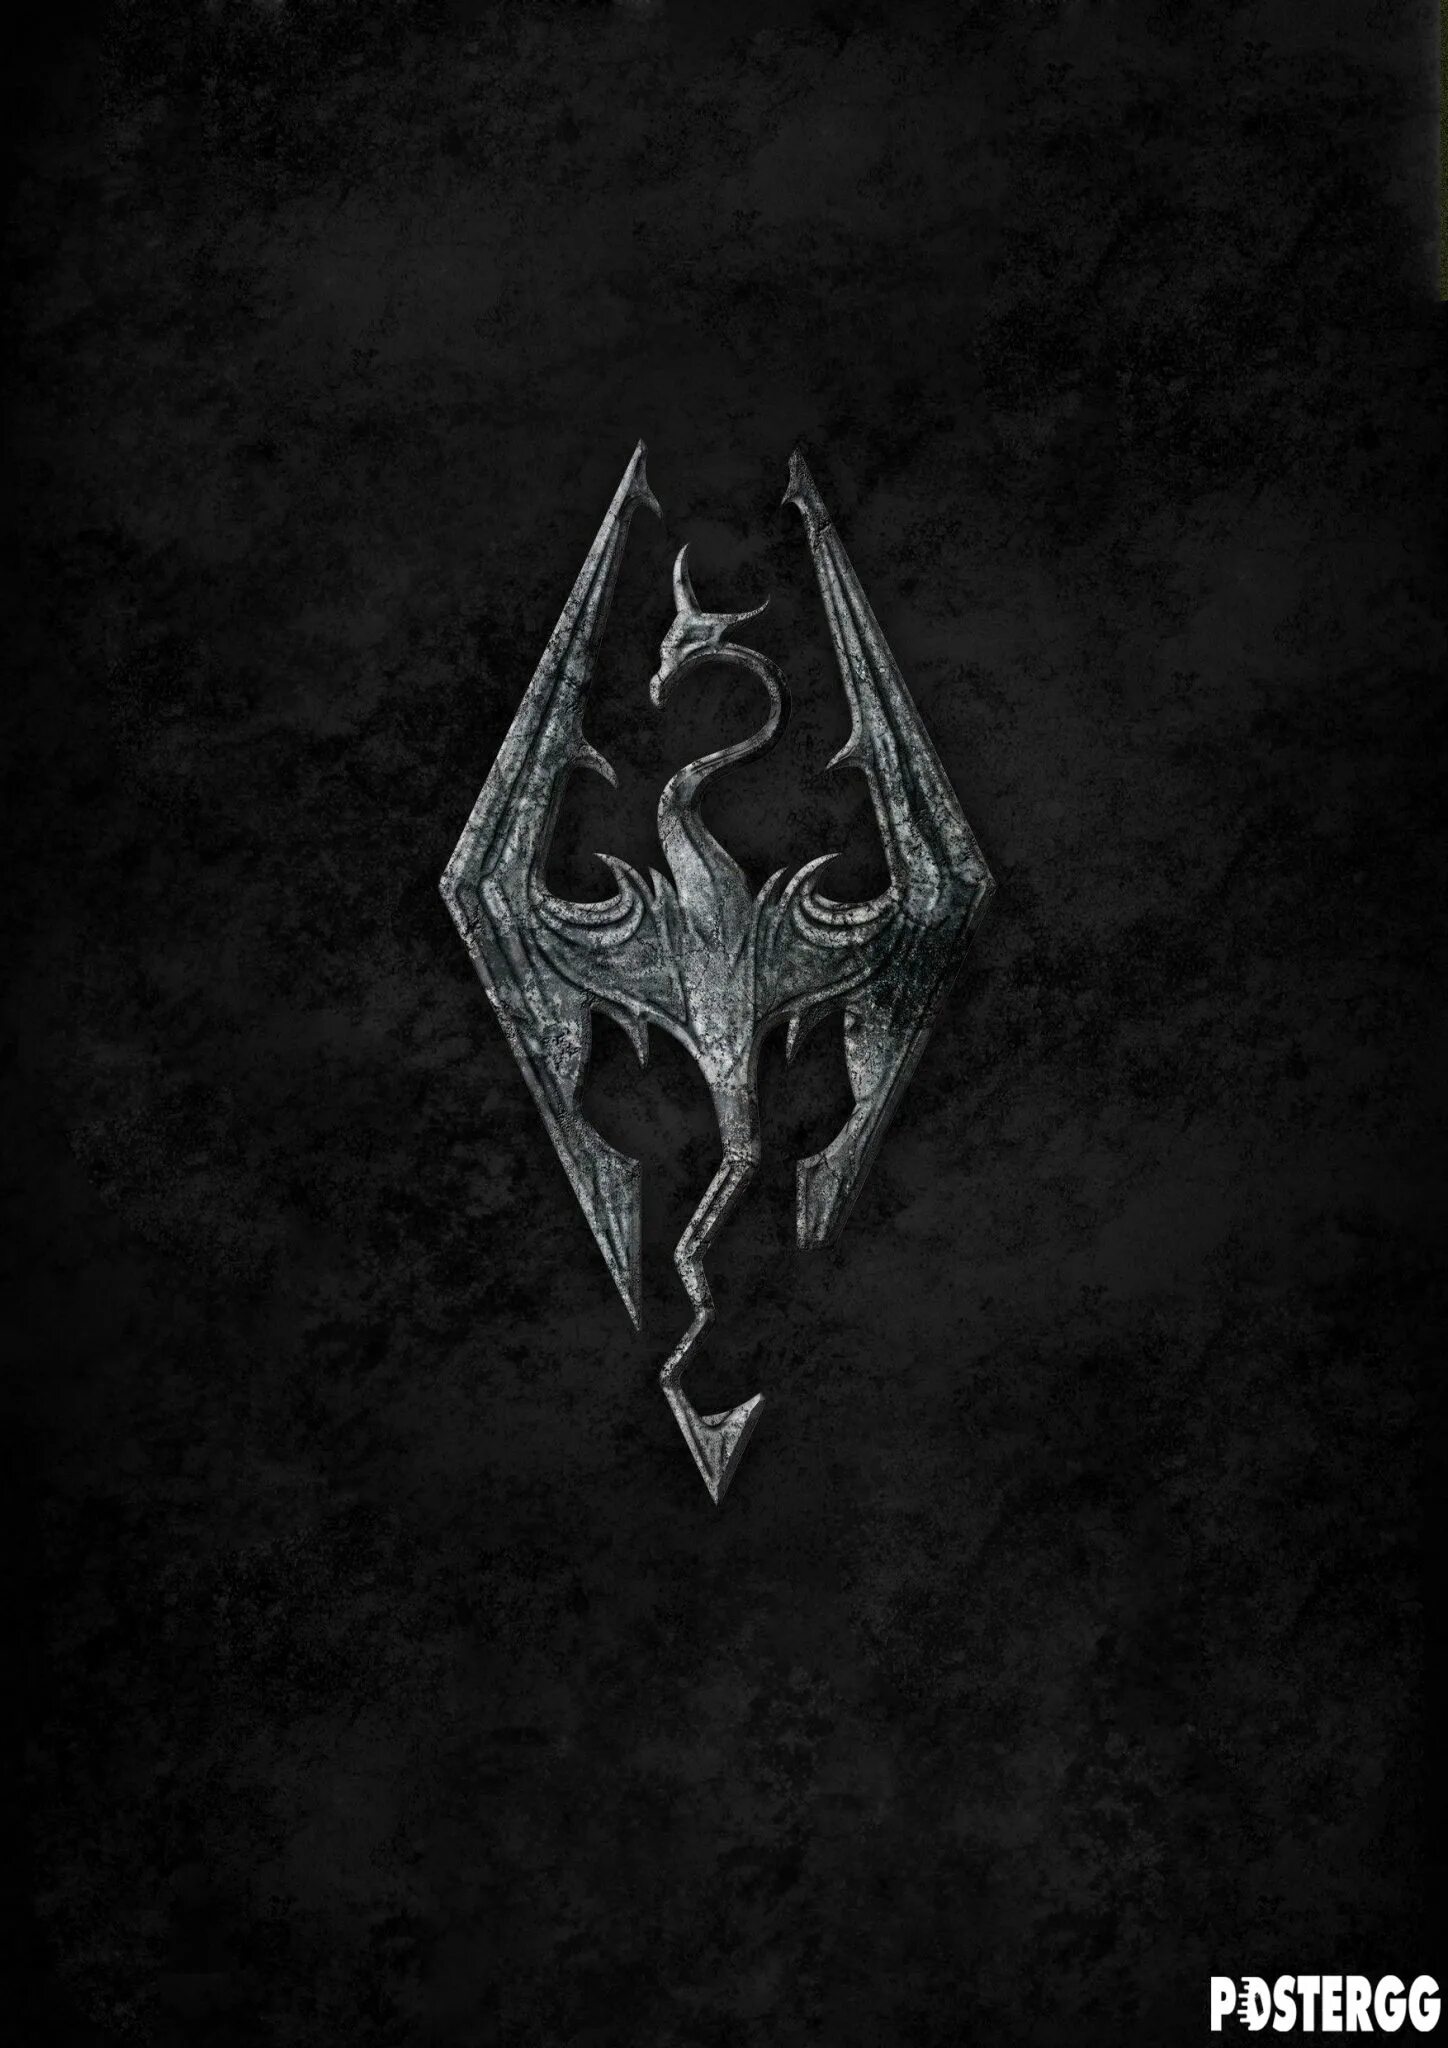 Скайрим the Elder Scrolls 5. Скайрим зе Элдер скролс 5. The Elder Scrolls v Skyrim логотип. Скайрим the Elder Scrolls 5 logo.